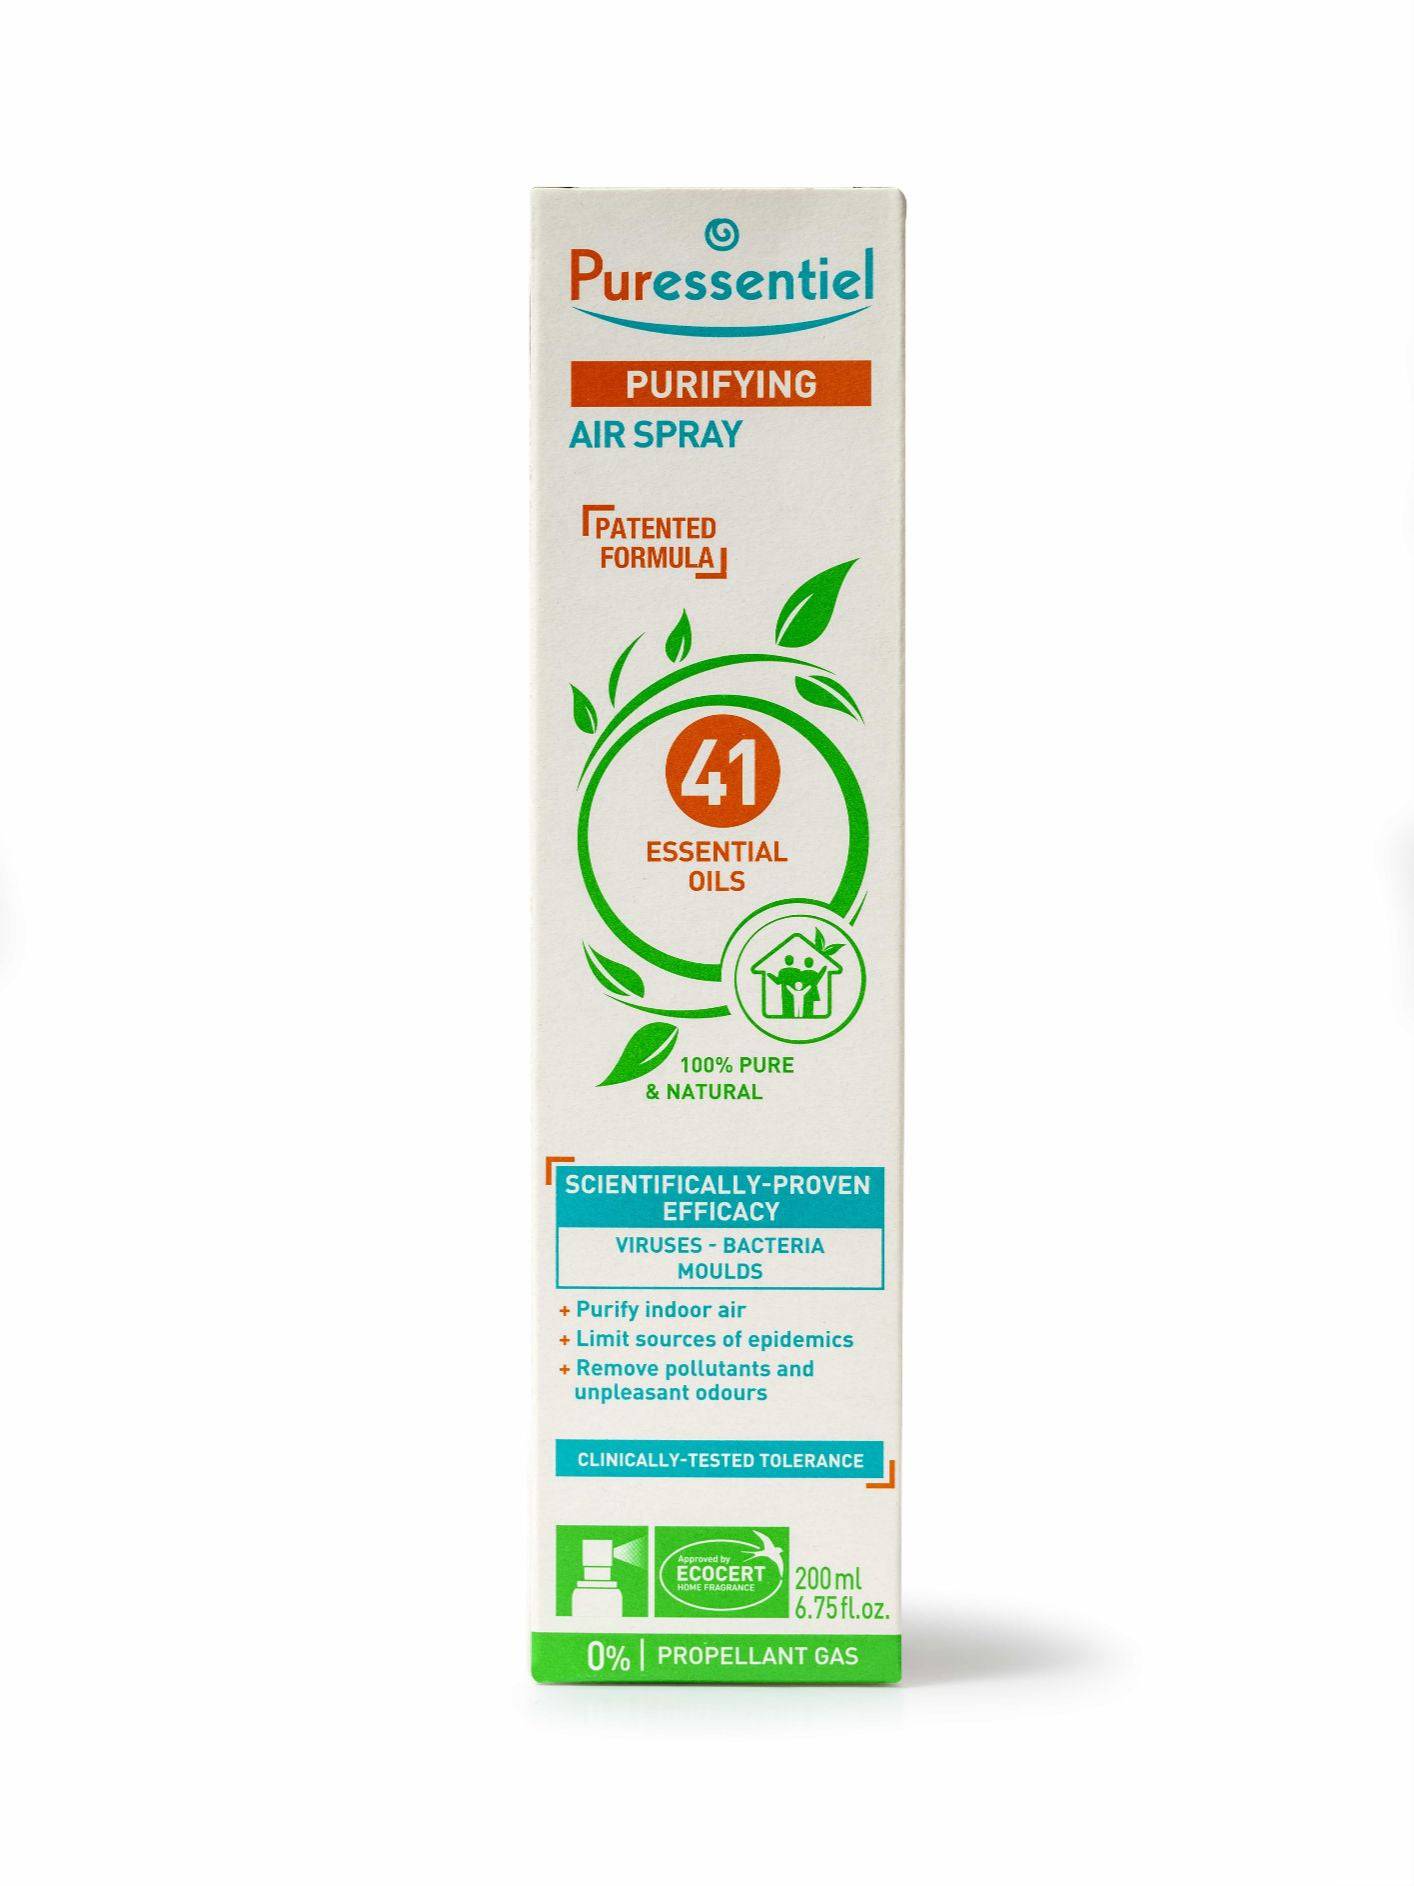 Puressentiel Purifying Air Spray 41 Essential Oils